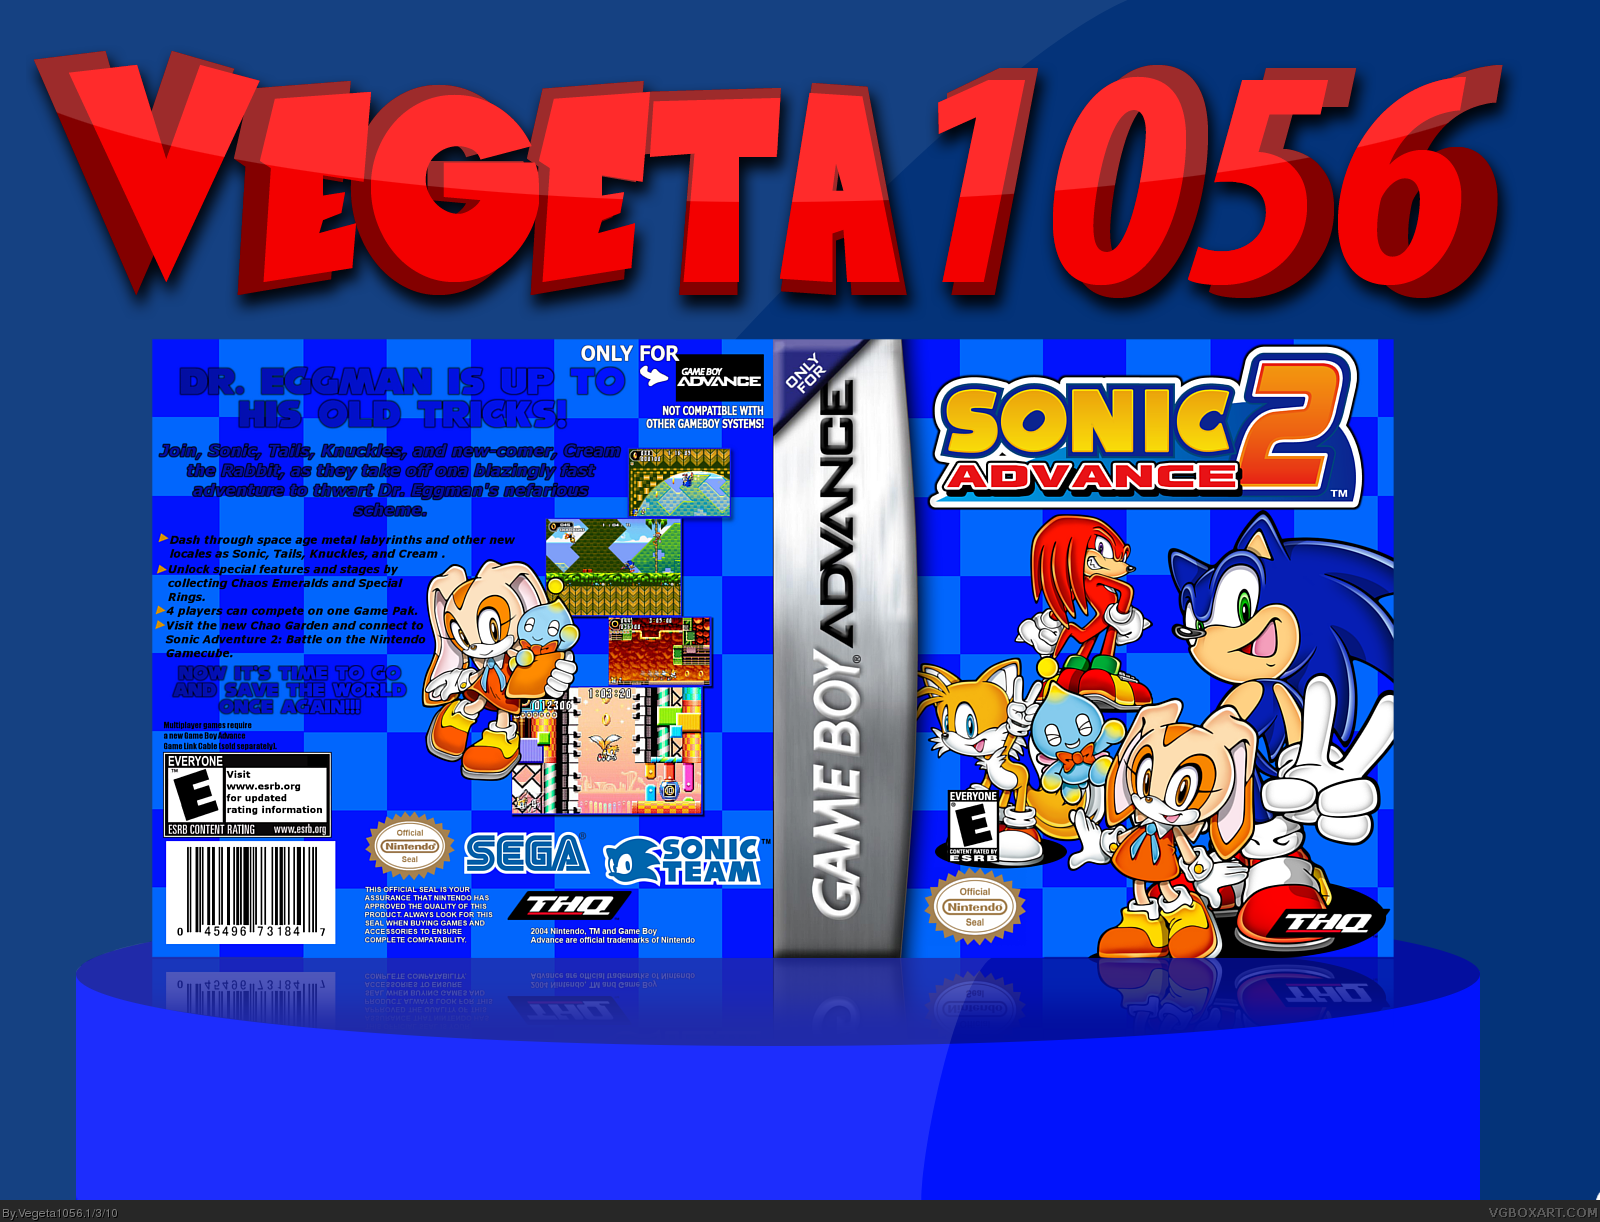 Sonic Advance 2 box cover